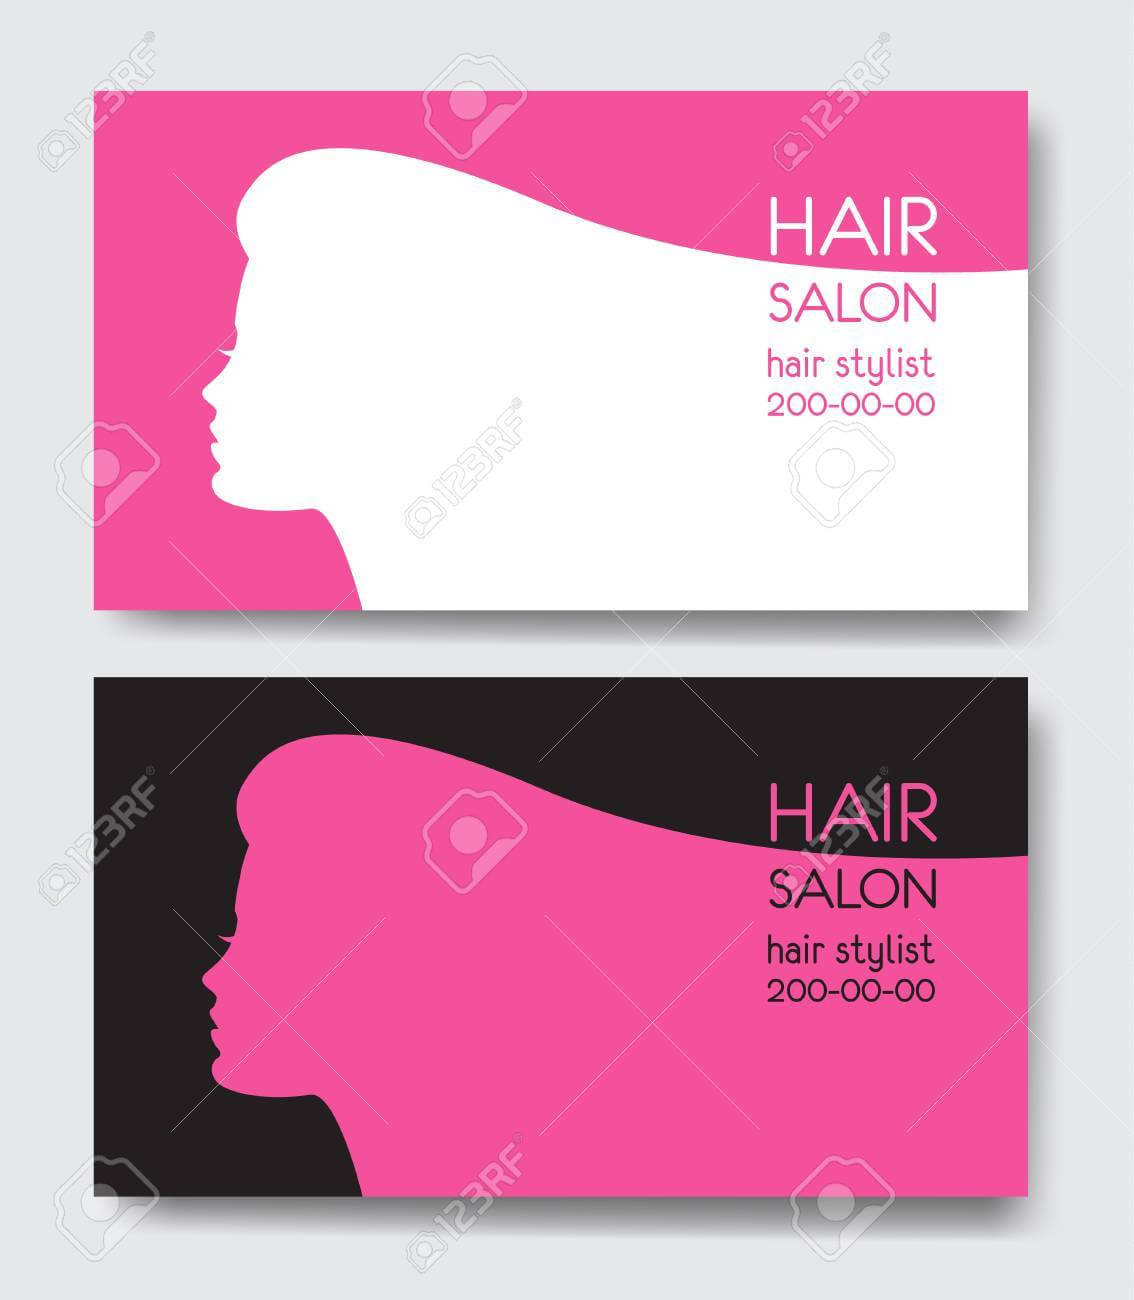 Hair Salon Business Card Templates. Intended For Hairdresser Business Card Templates Free